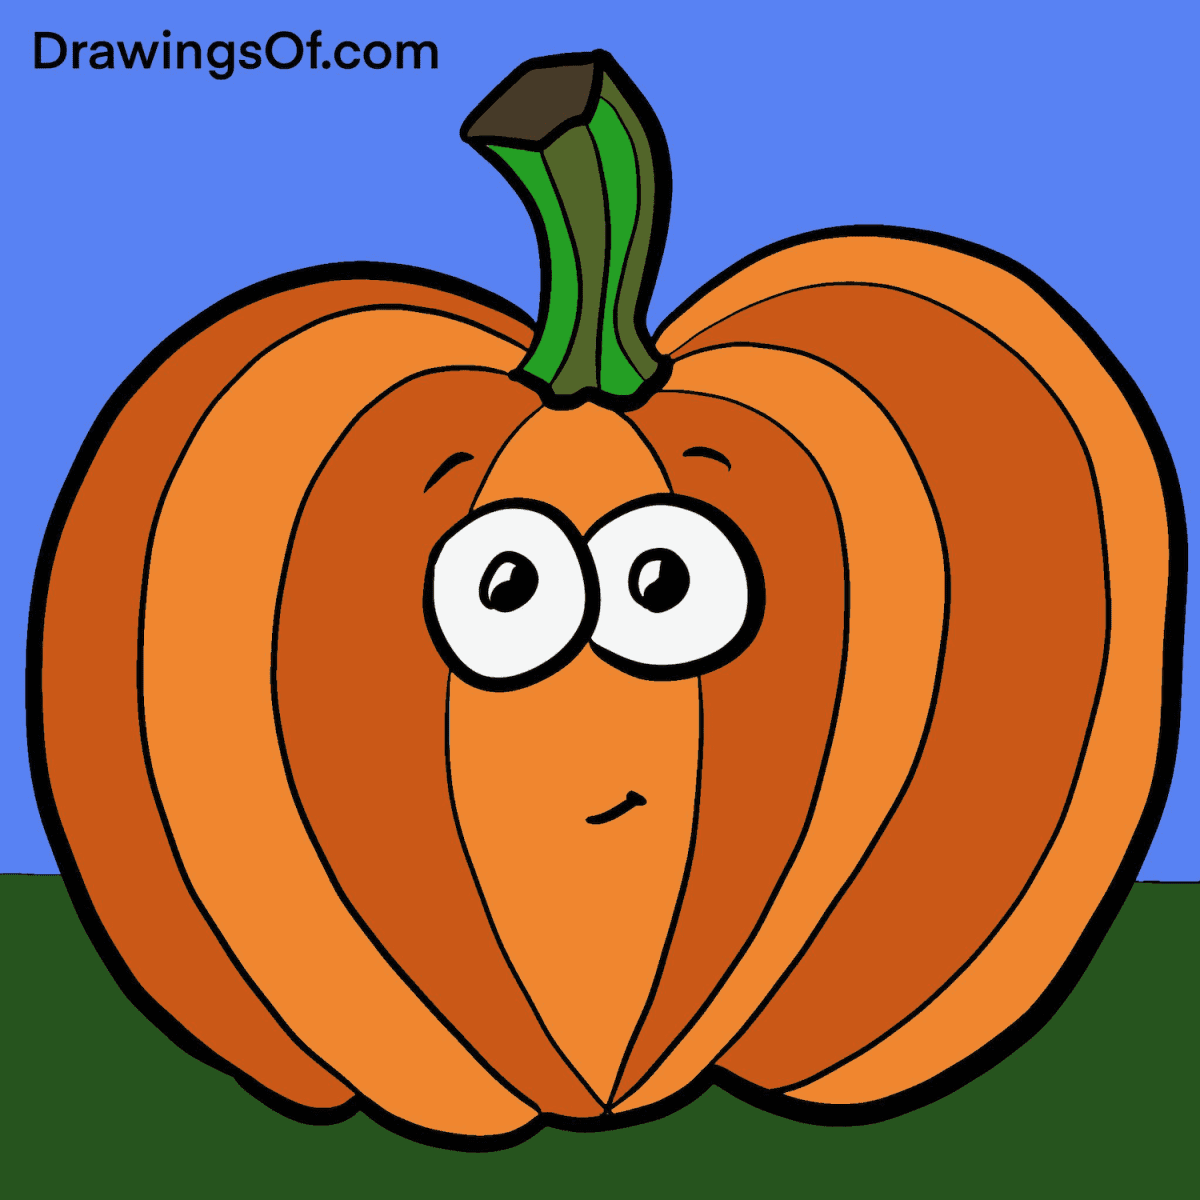 Simple, cute drawing of a pumpkin